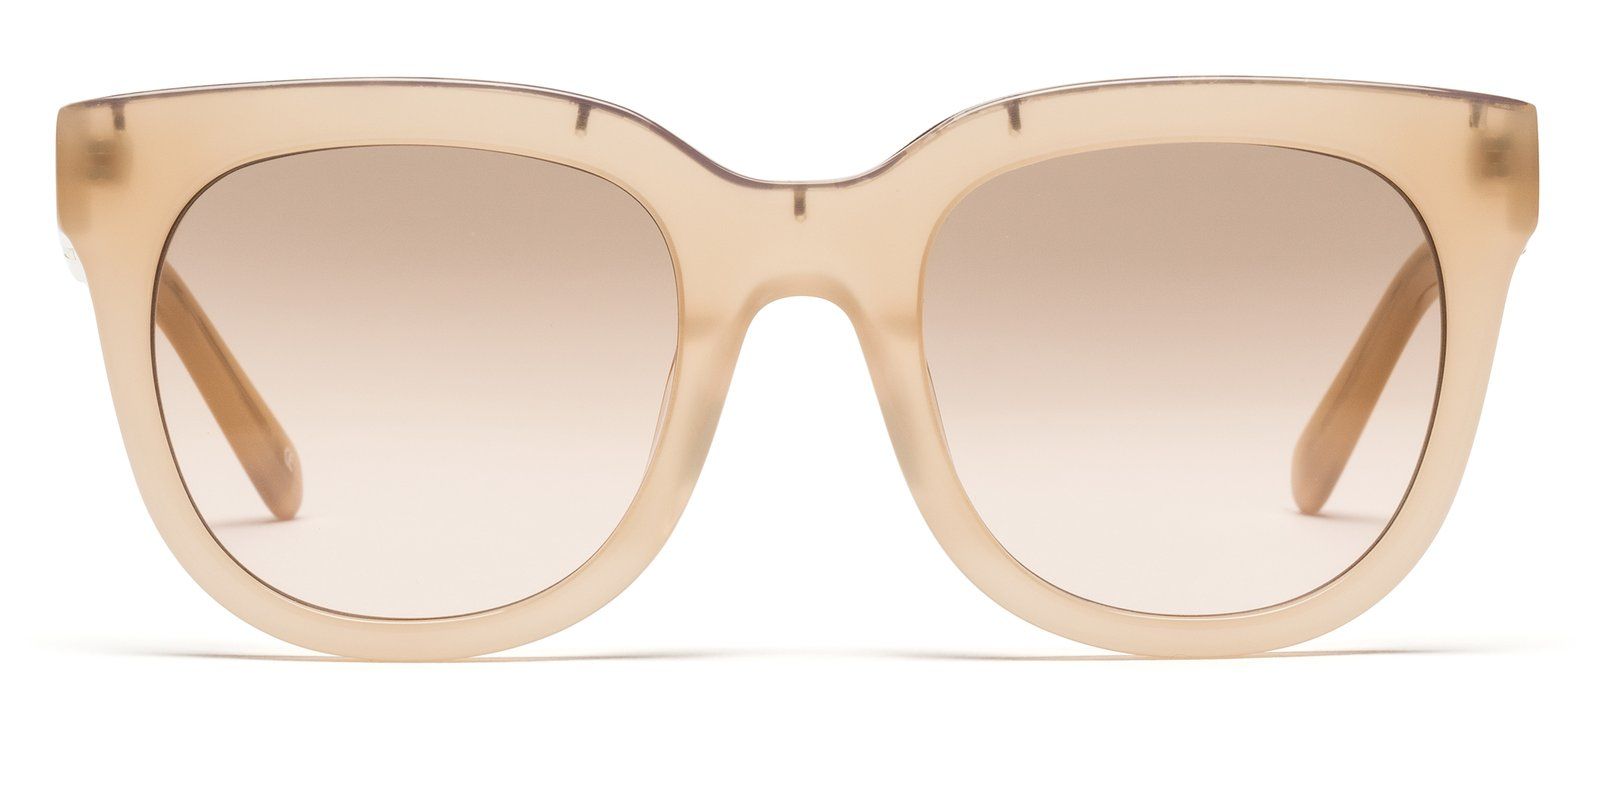 Moore 02 Sunglasses